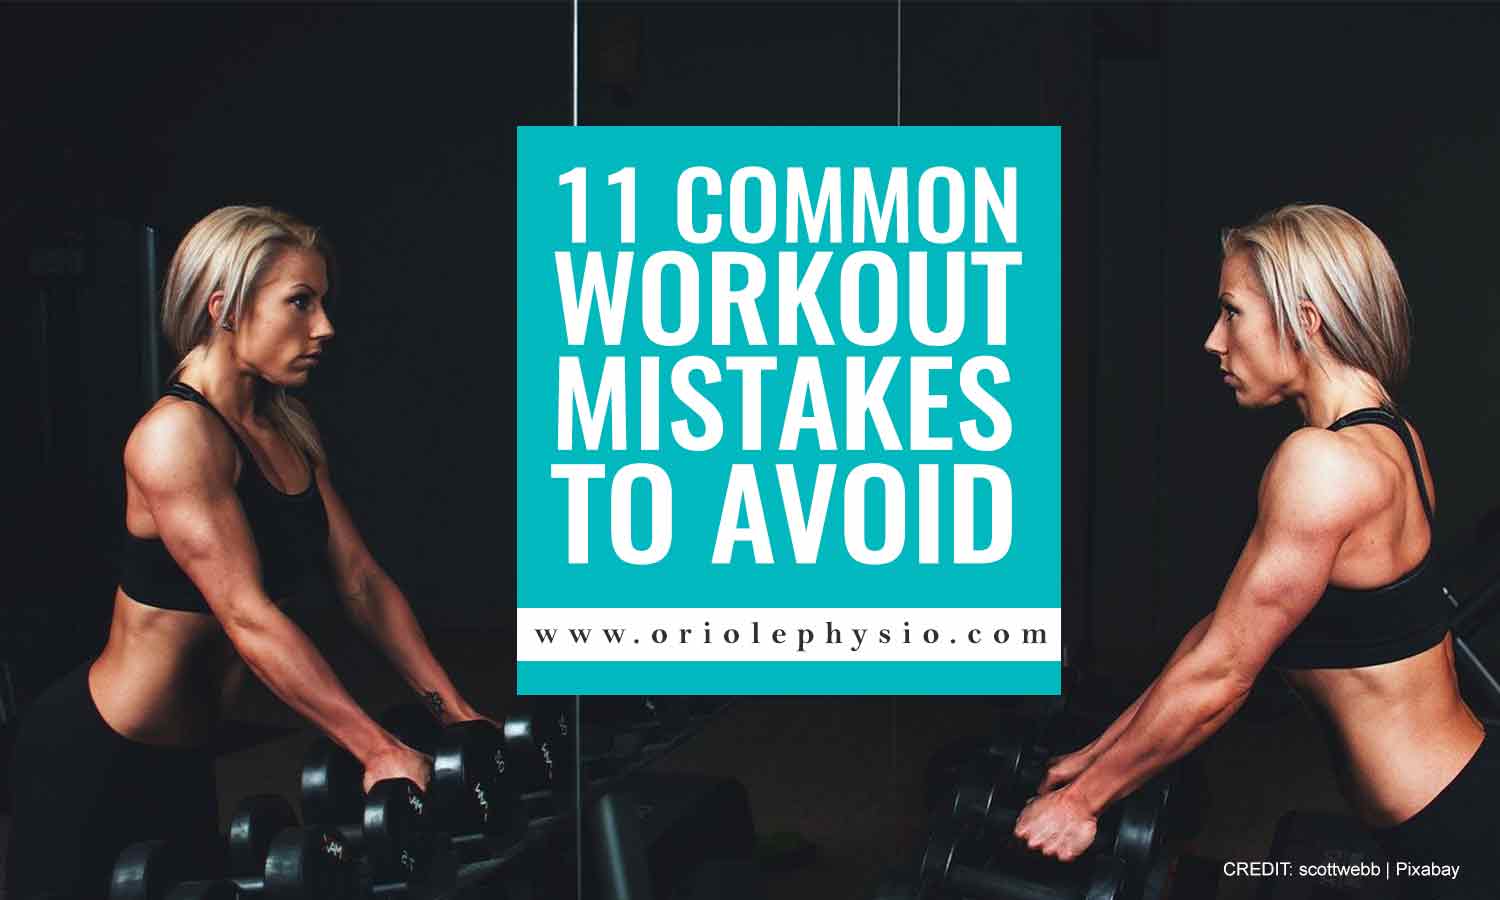 11 Common Workout Mistakes to Avoid